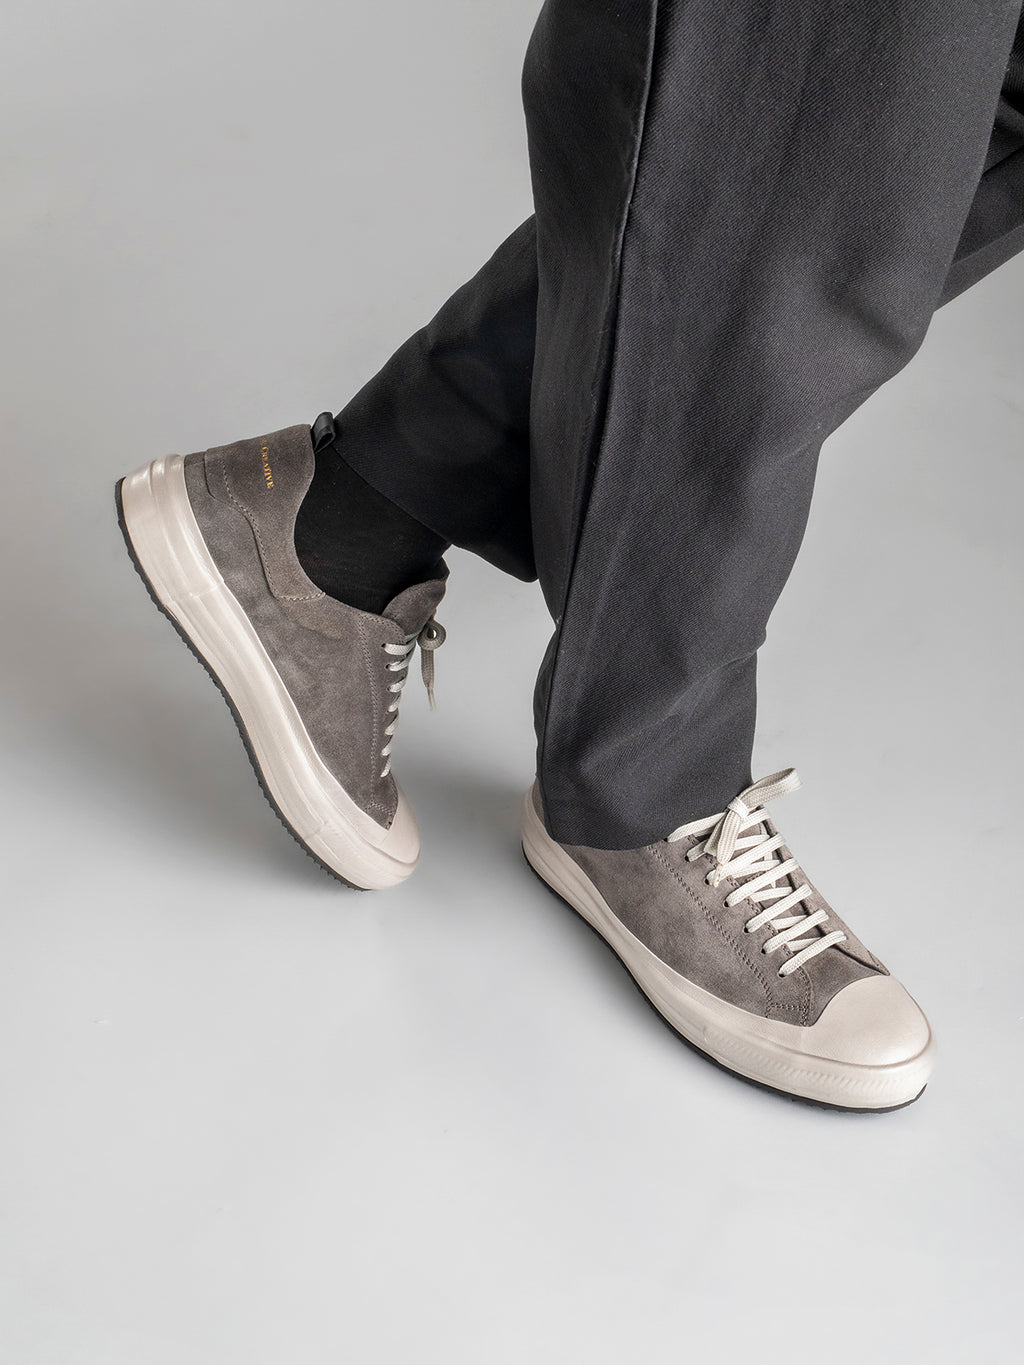 MES 009 Orice  - Brown Suede sneakers Men Officine Creative - 6